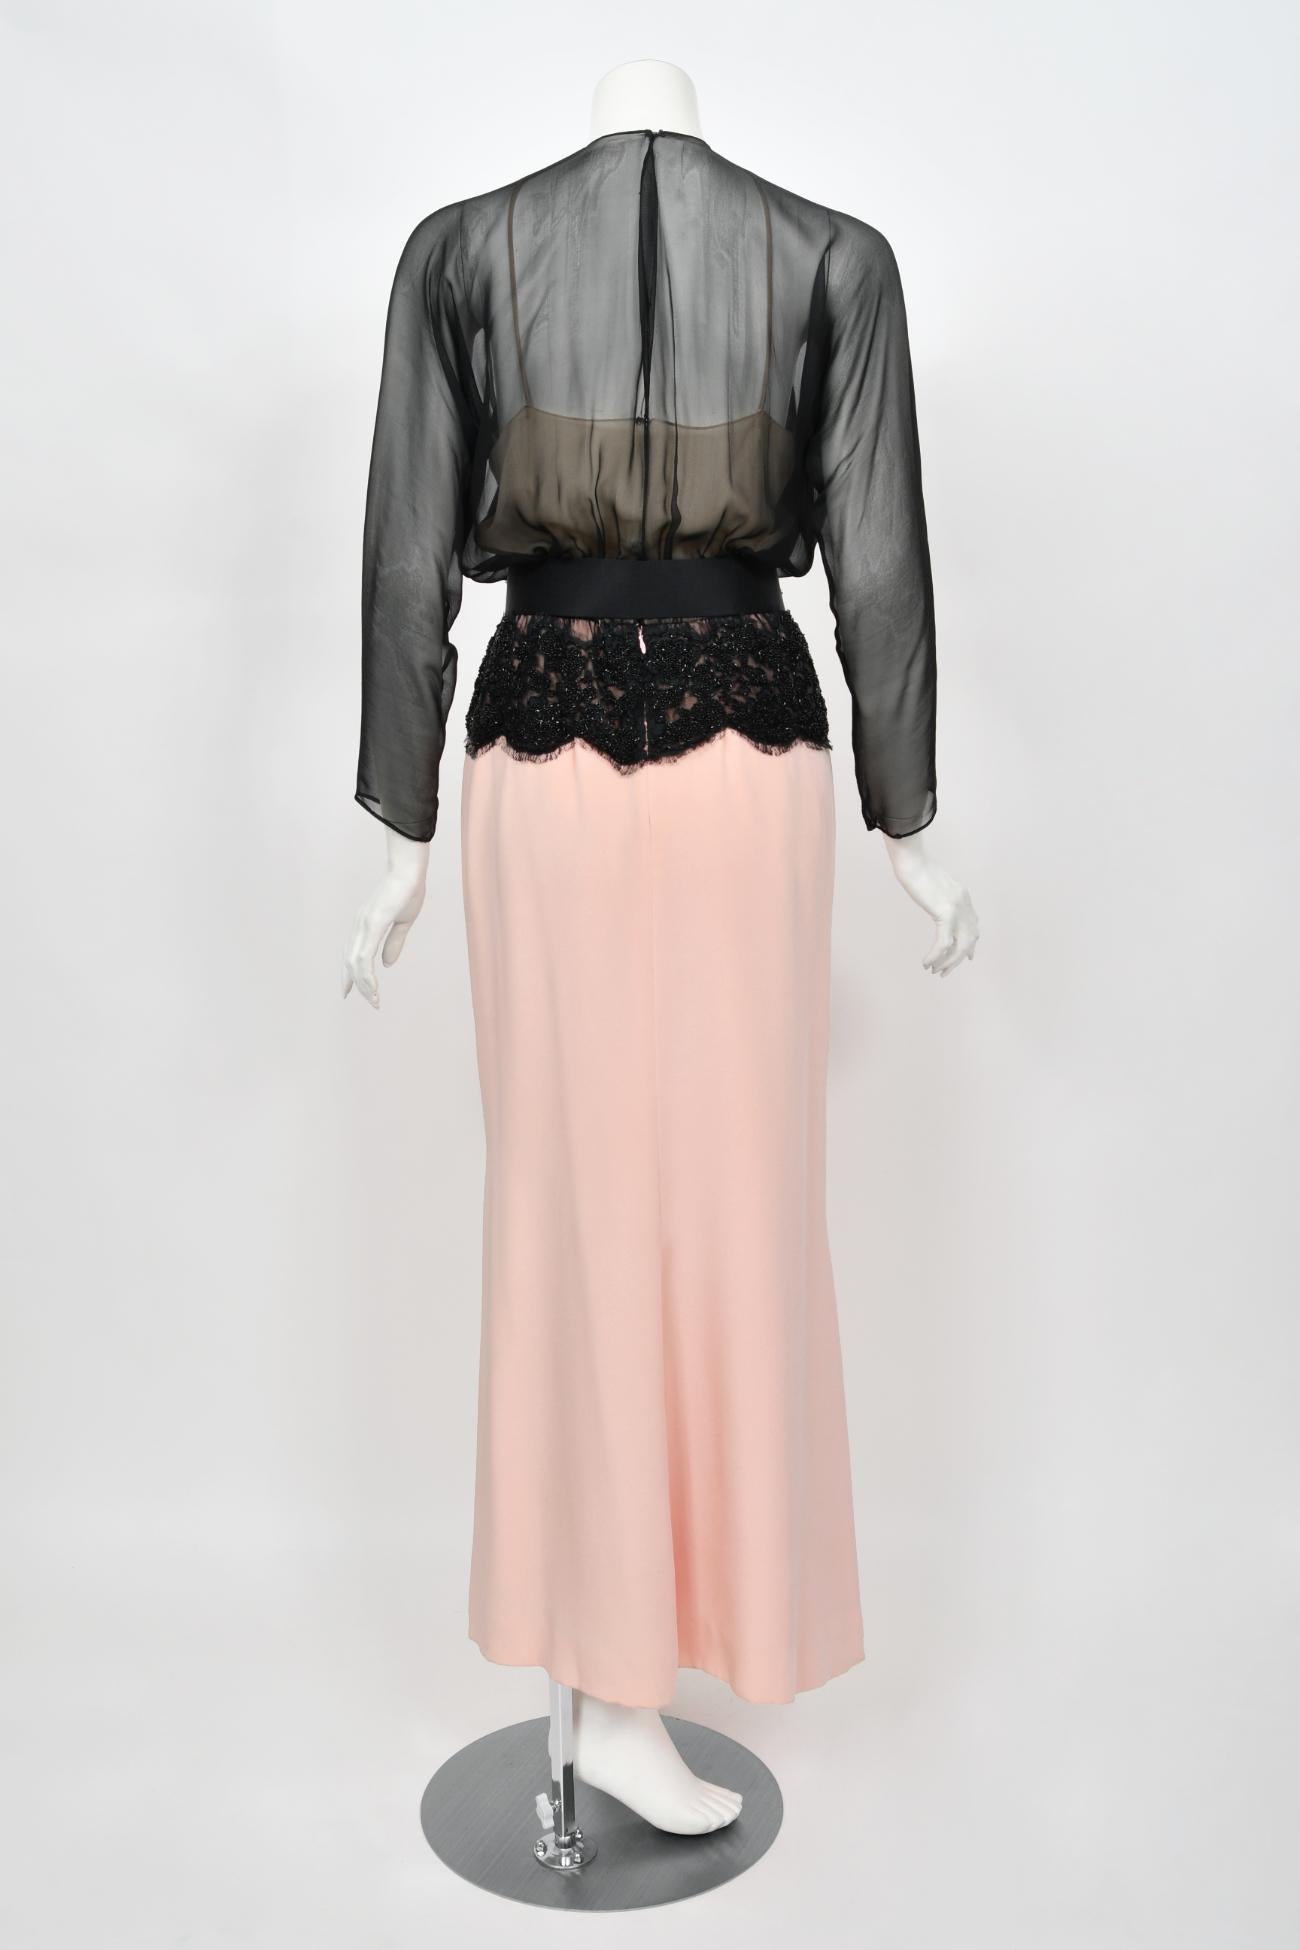 1986 Oscar de la Renta Documented Runway Black Sheer Chiffon & Pink Silk Gown For Sale 7